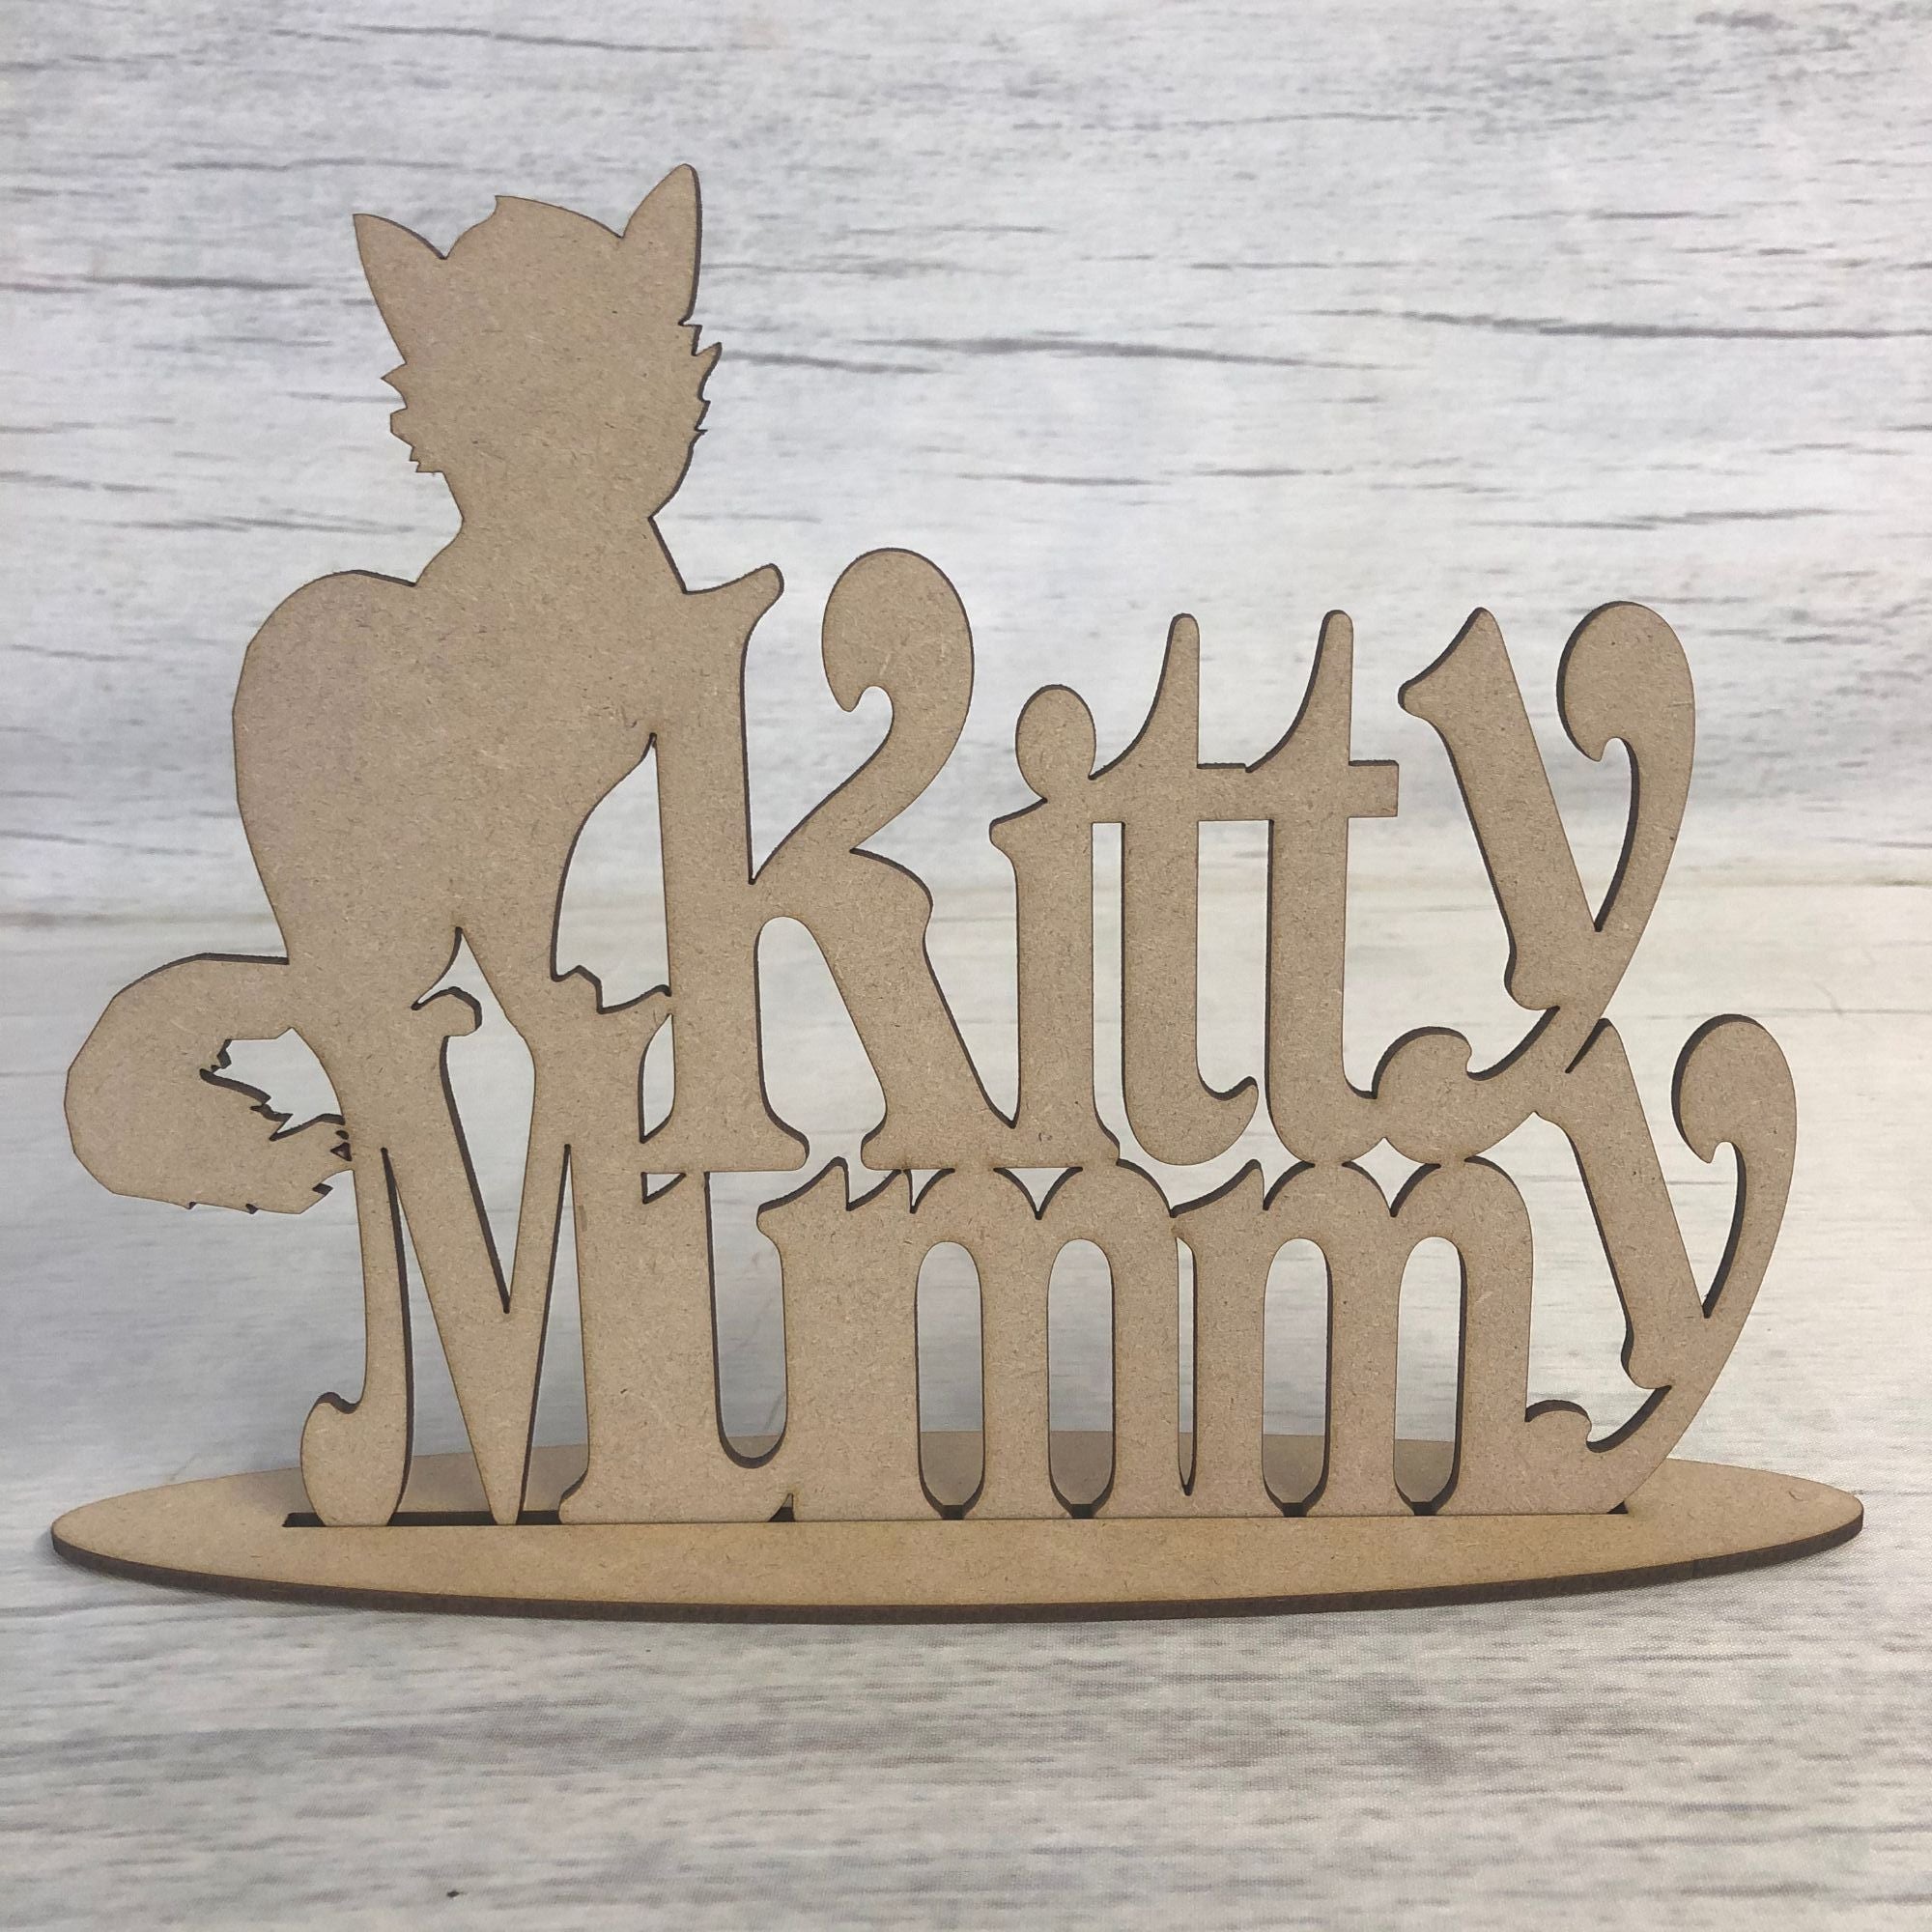 Base MDF - Free standing plaque - 'Kitty Mummy'